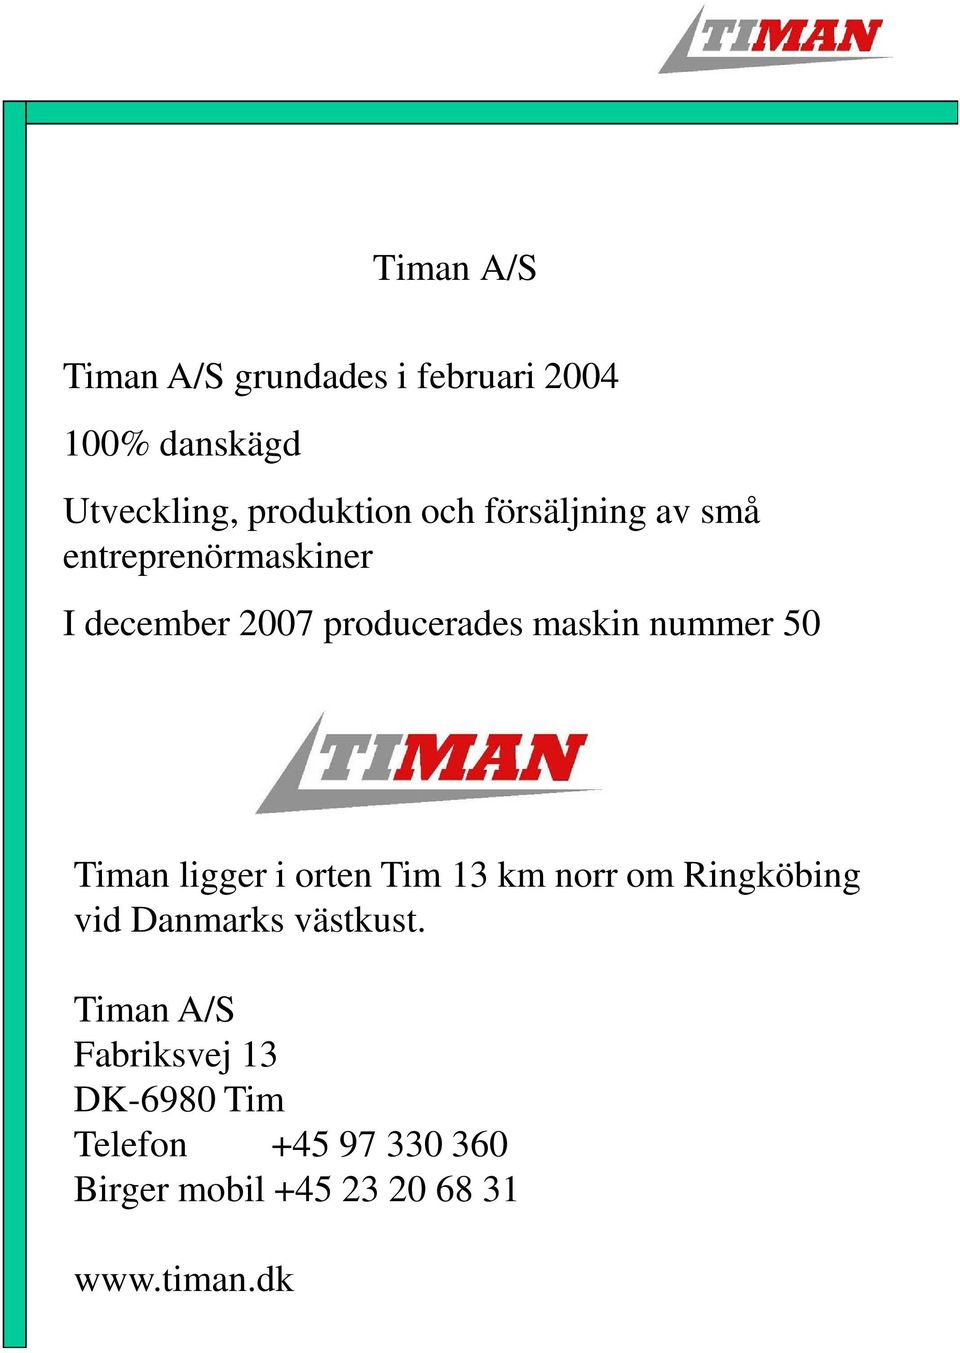 Timan ligger i orten Tim 13 km norr om Ringköbing vid Danmarks västkust.